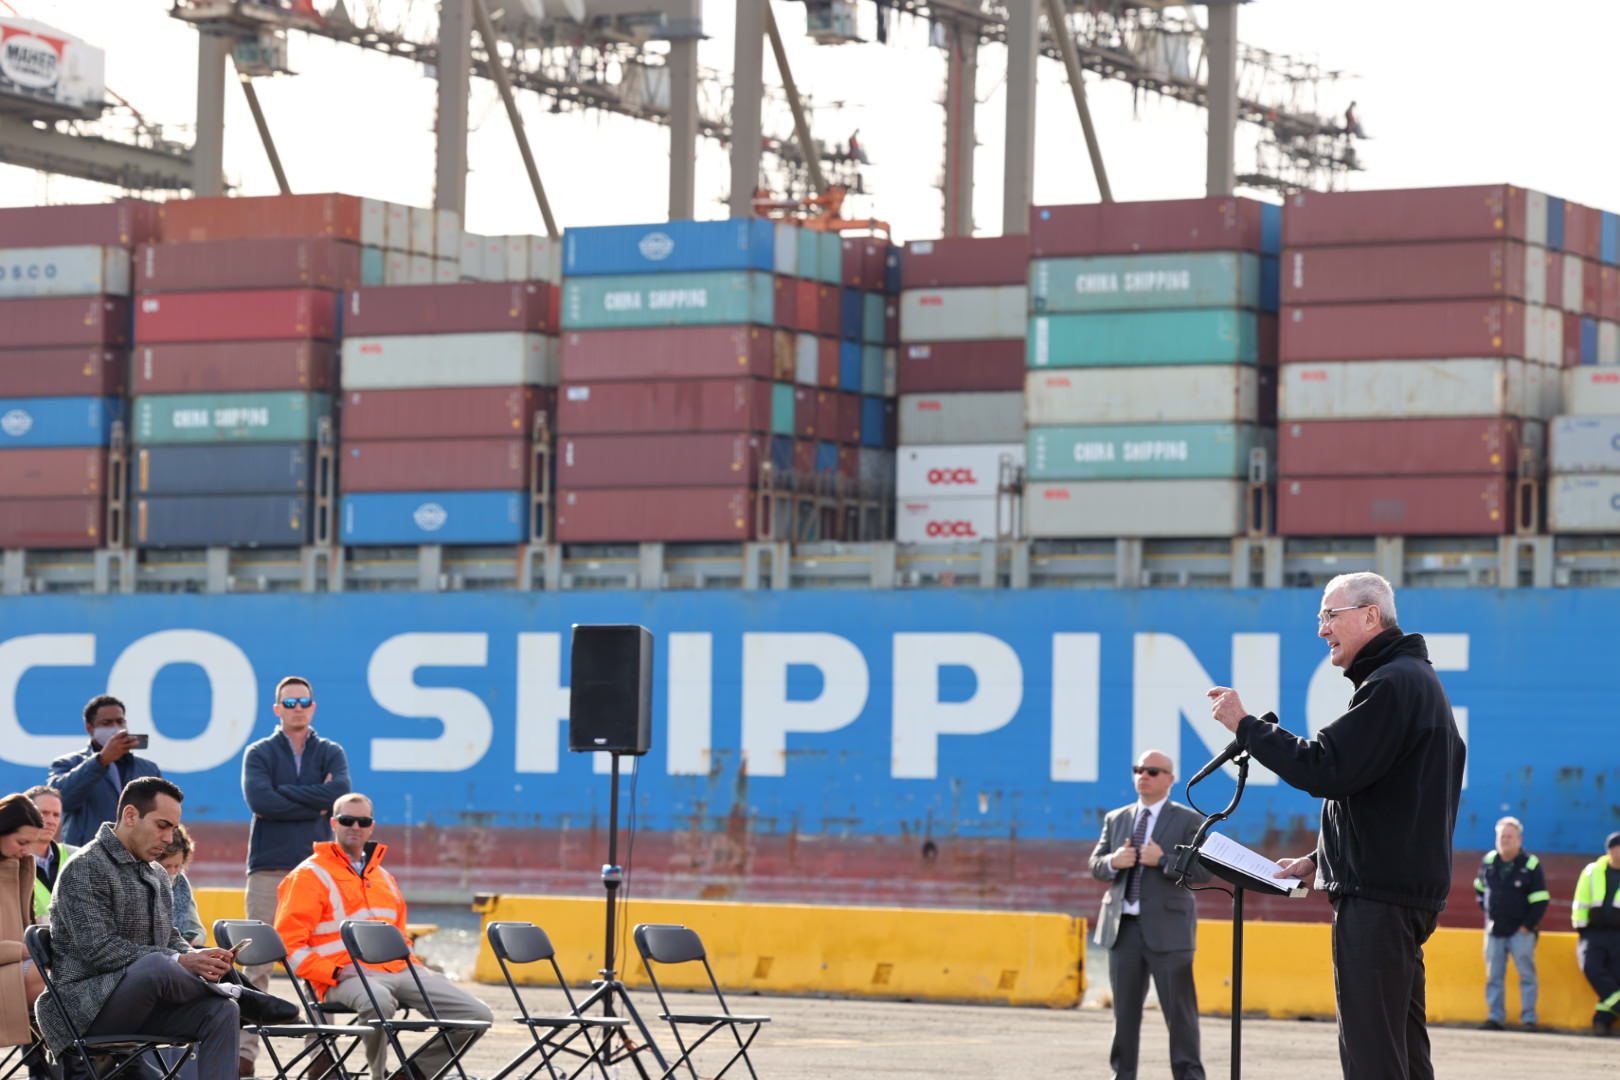 Governor Murphy visit port newark